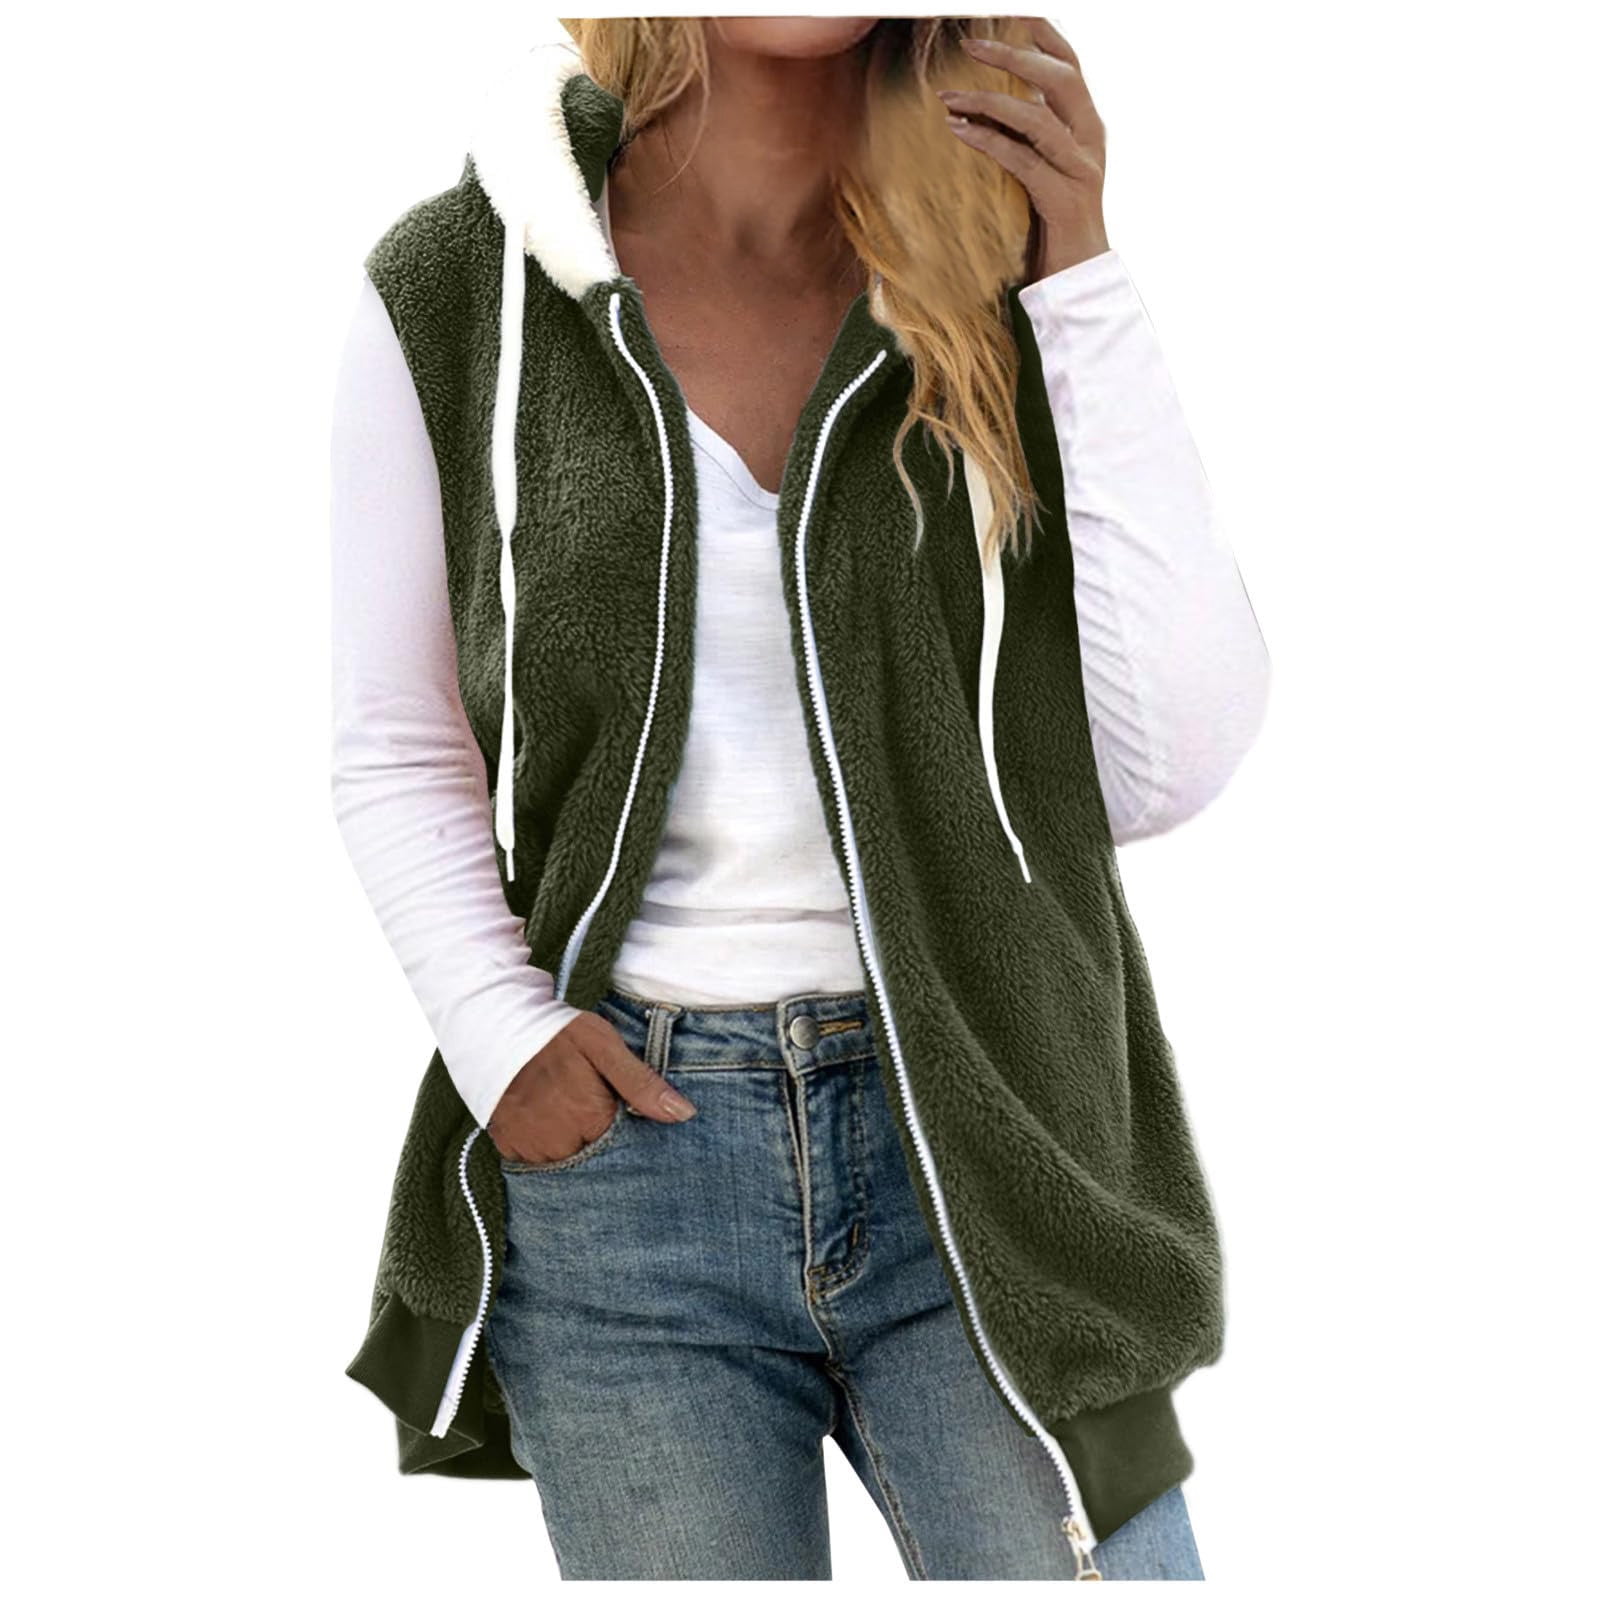 Hvyesh Women's Fleece Vest Soft Sleeveless Zip Up Hooded Jacket